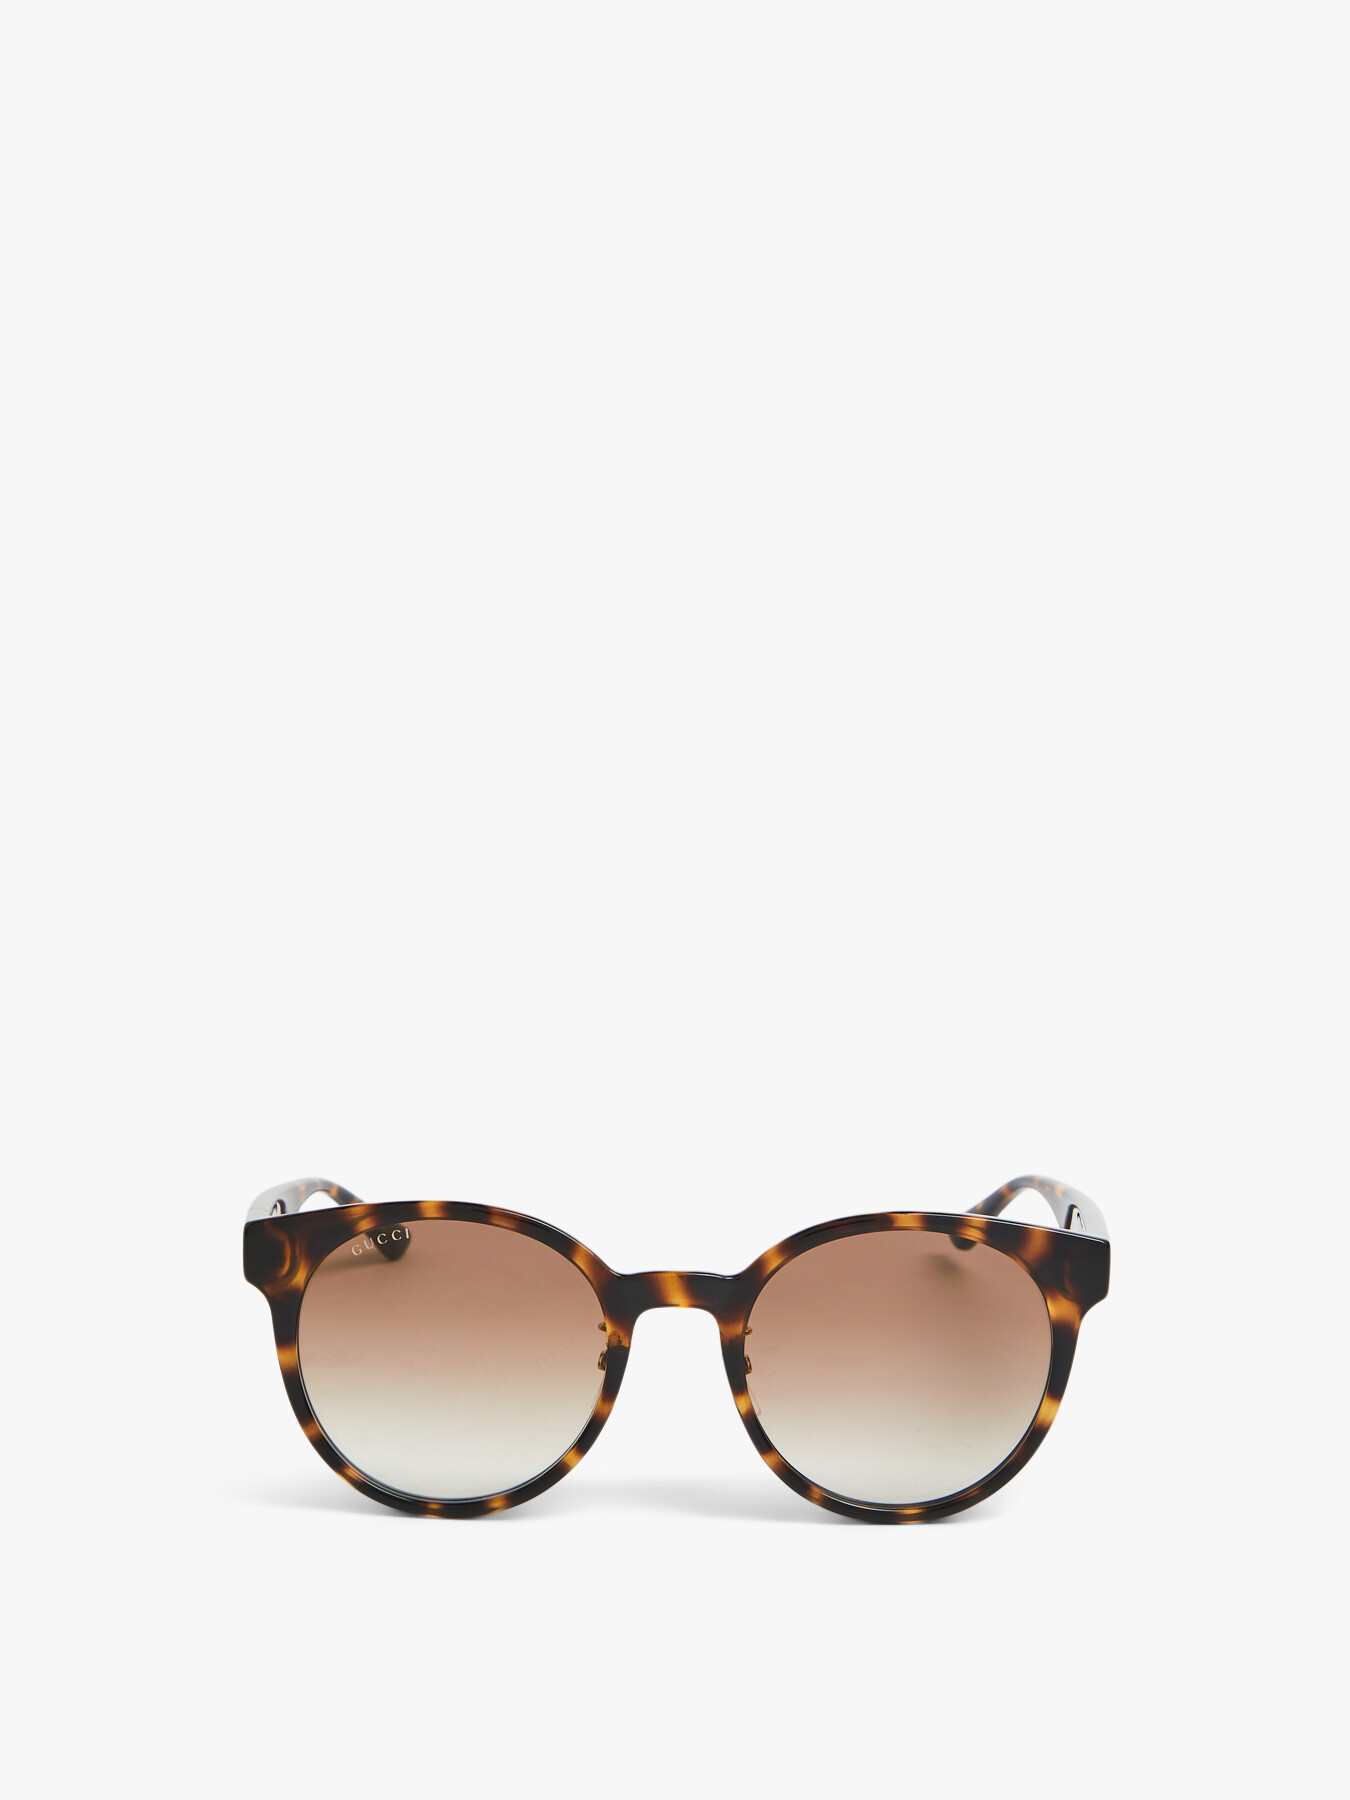 Gucci Women's Acetate Round Sunglasses Brown